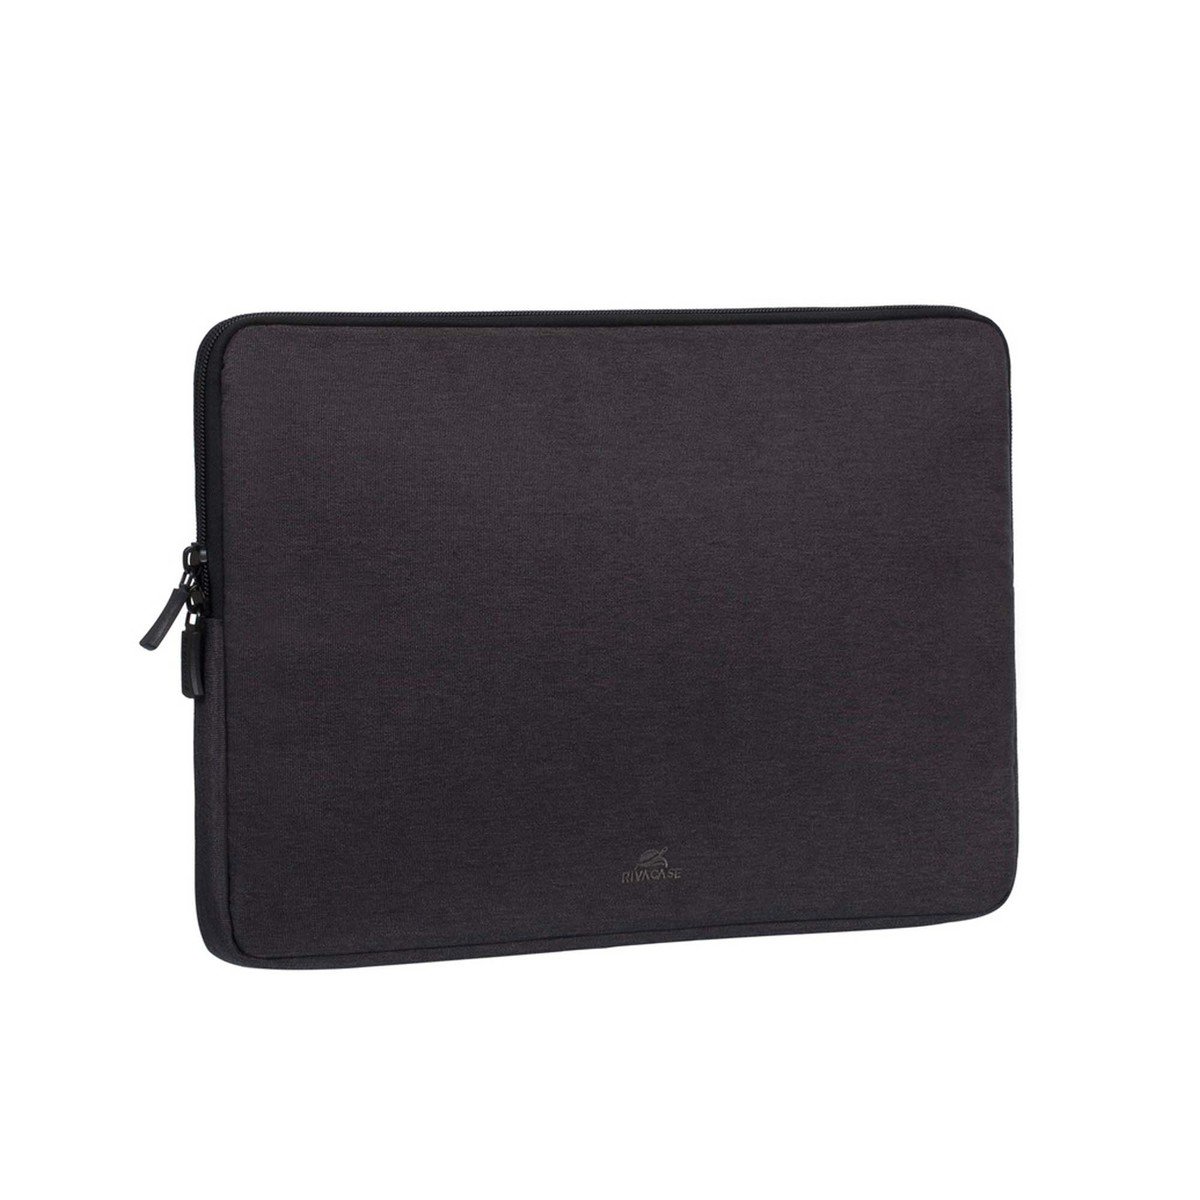 Rivacase Macbook Case7704 14 inch Black